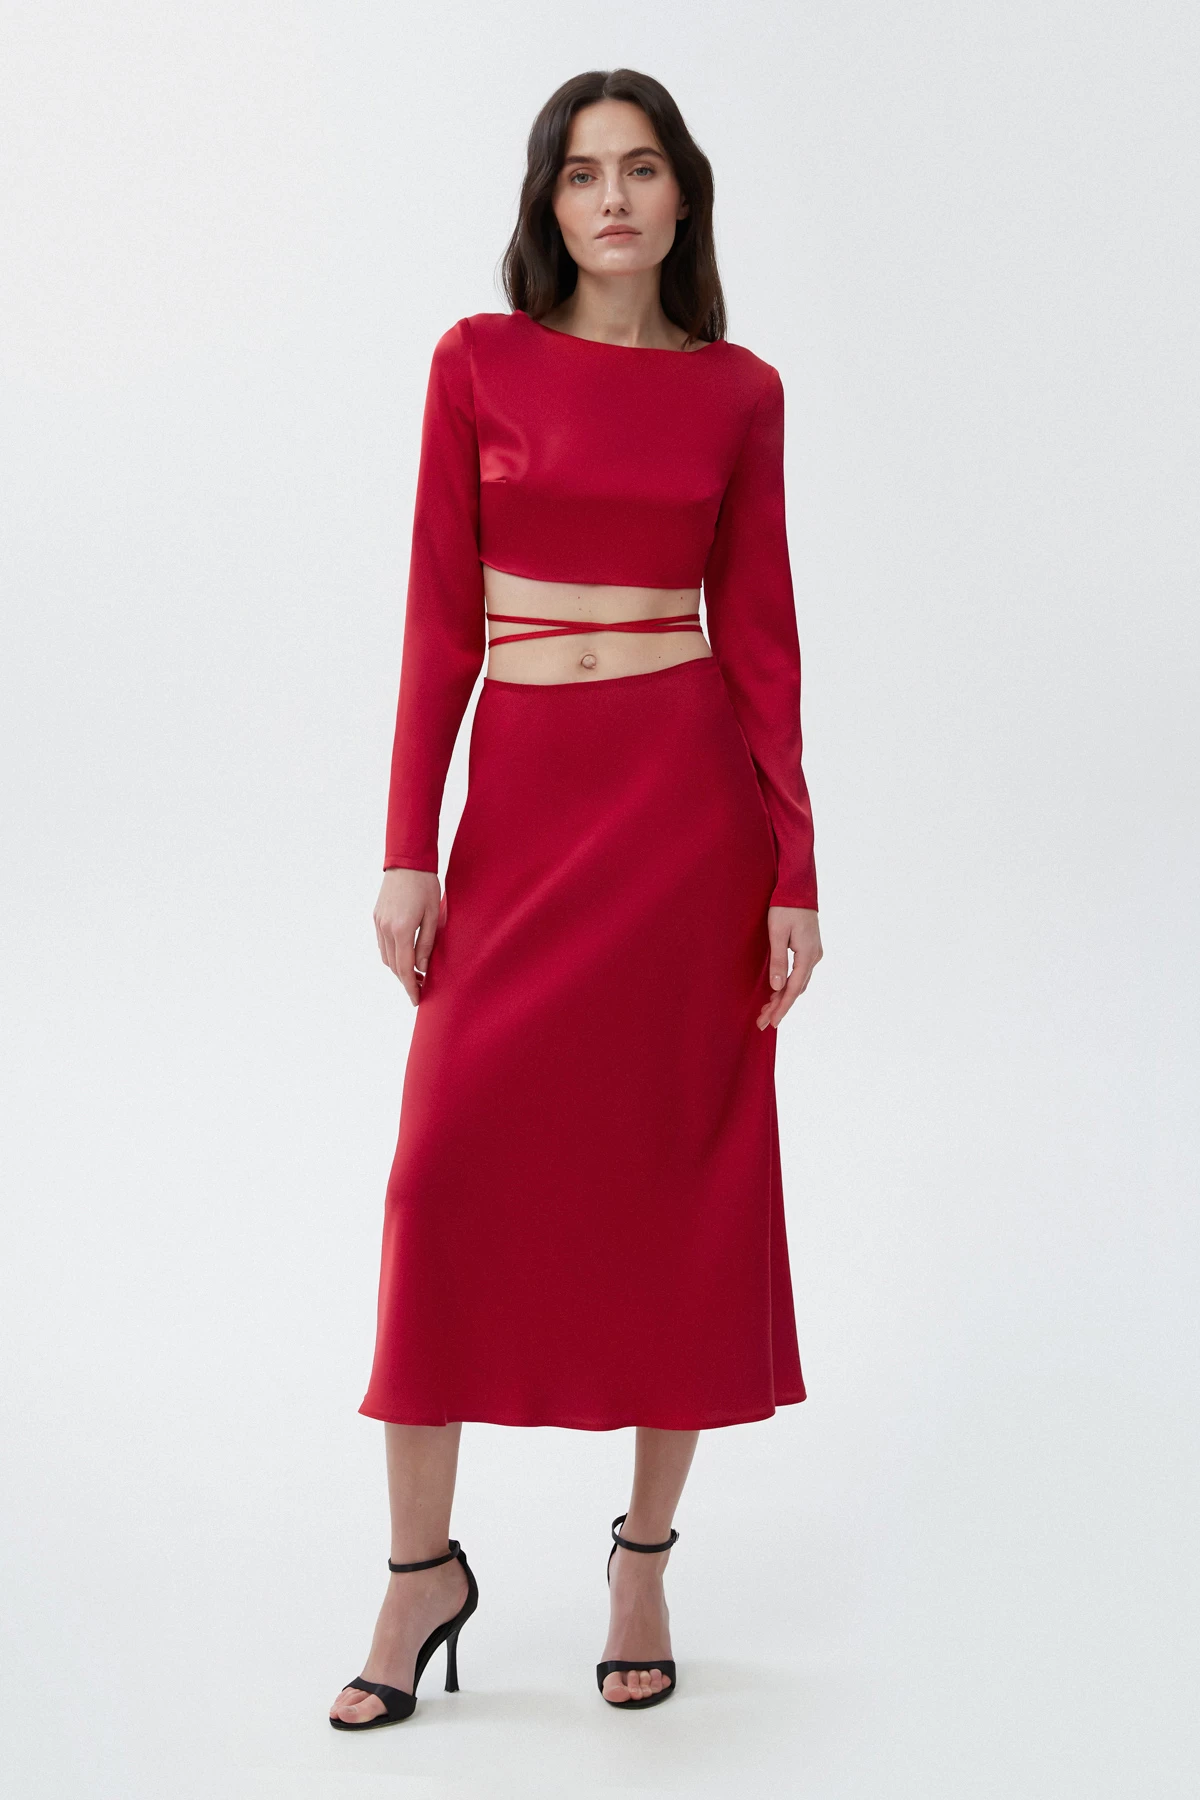 Red satin midi skirt, photo 1